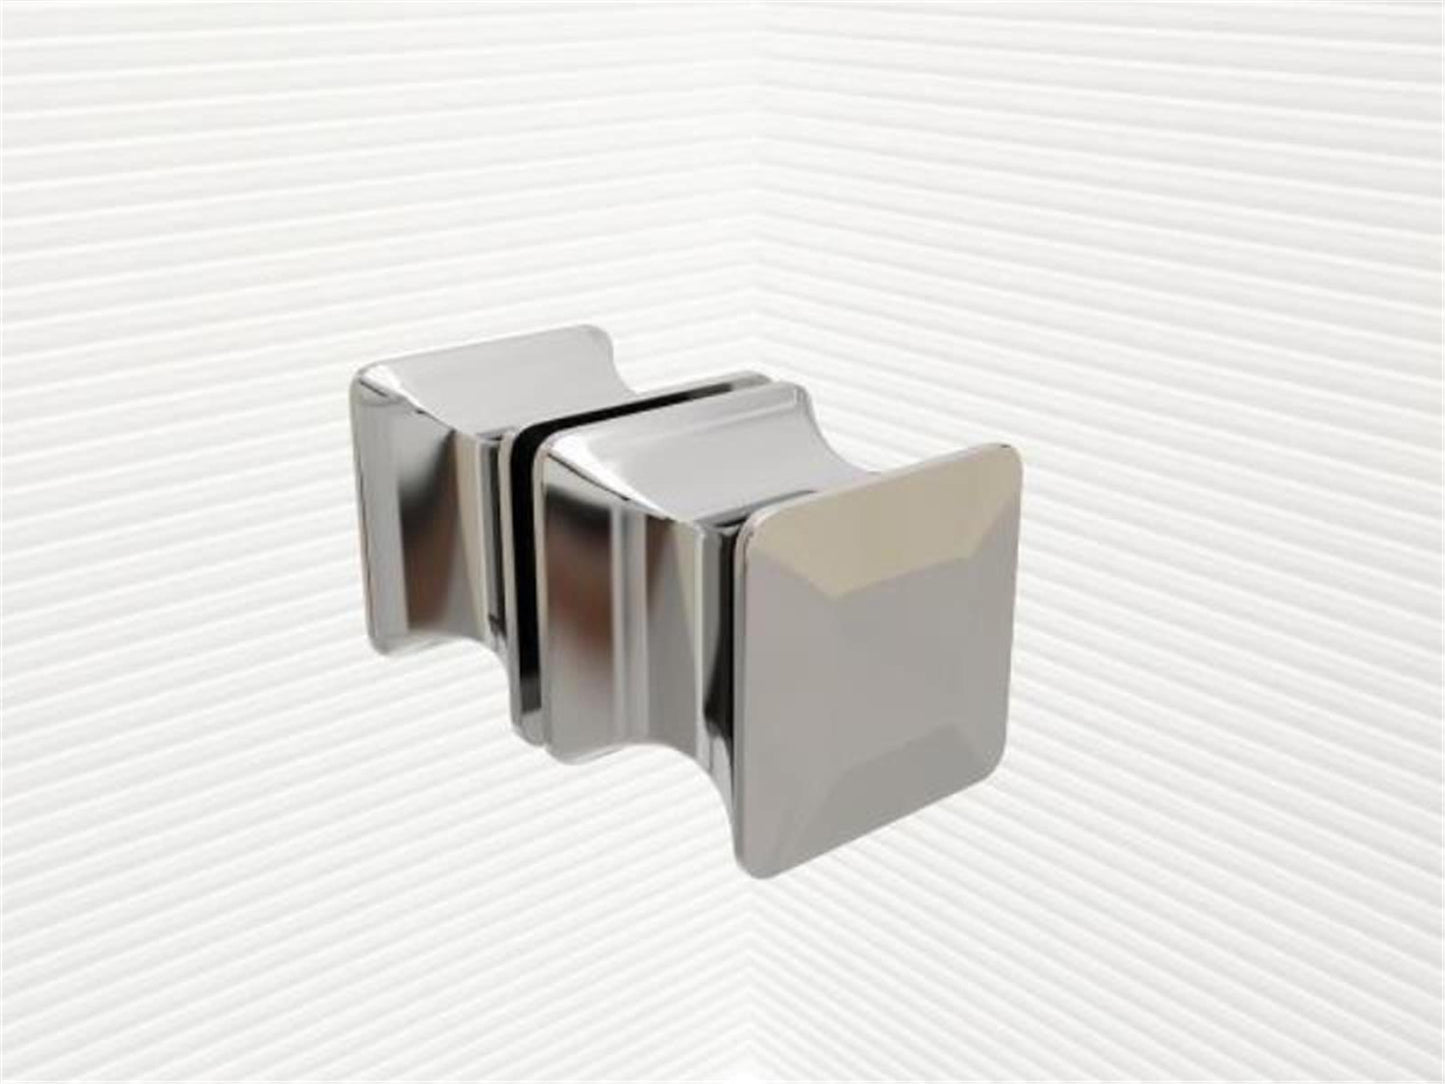 GlasHomeCenter - Box doccia a U "Asuka" (120x90x195cm) - 8mm - box doccia ad angolo - parete doccia - senza piatto doccia